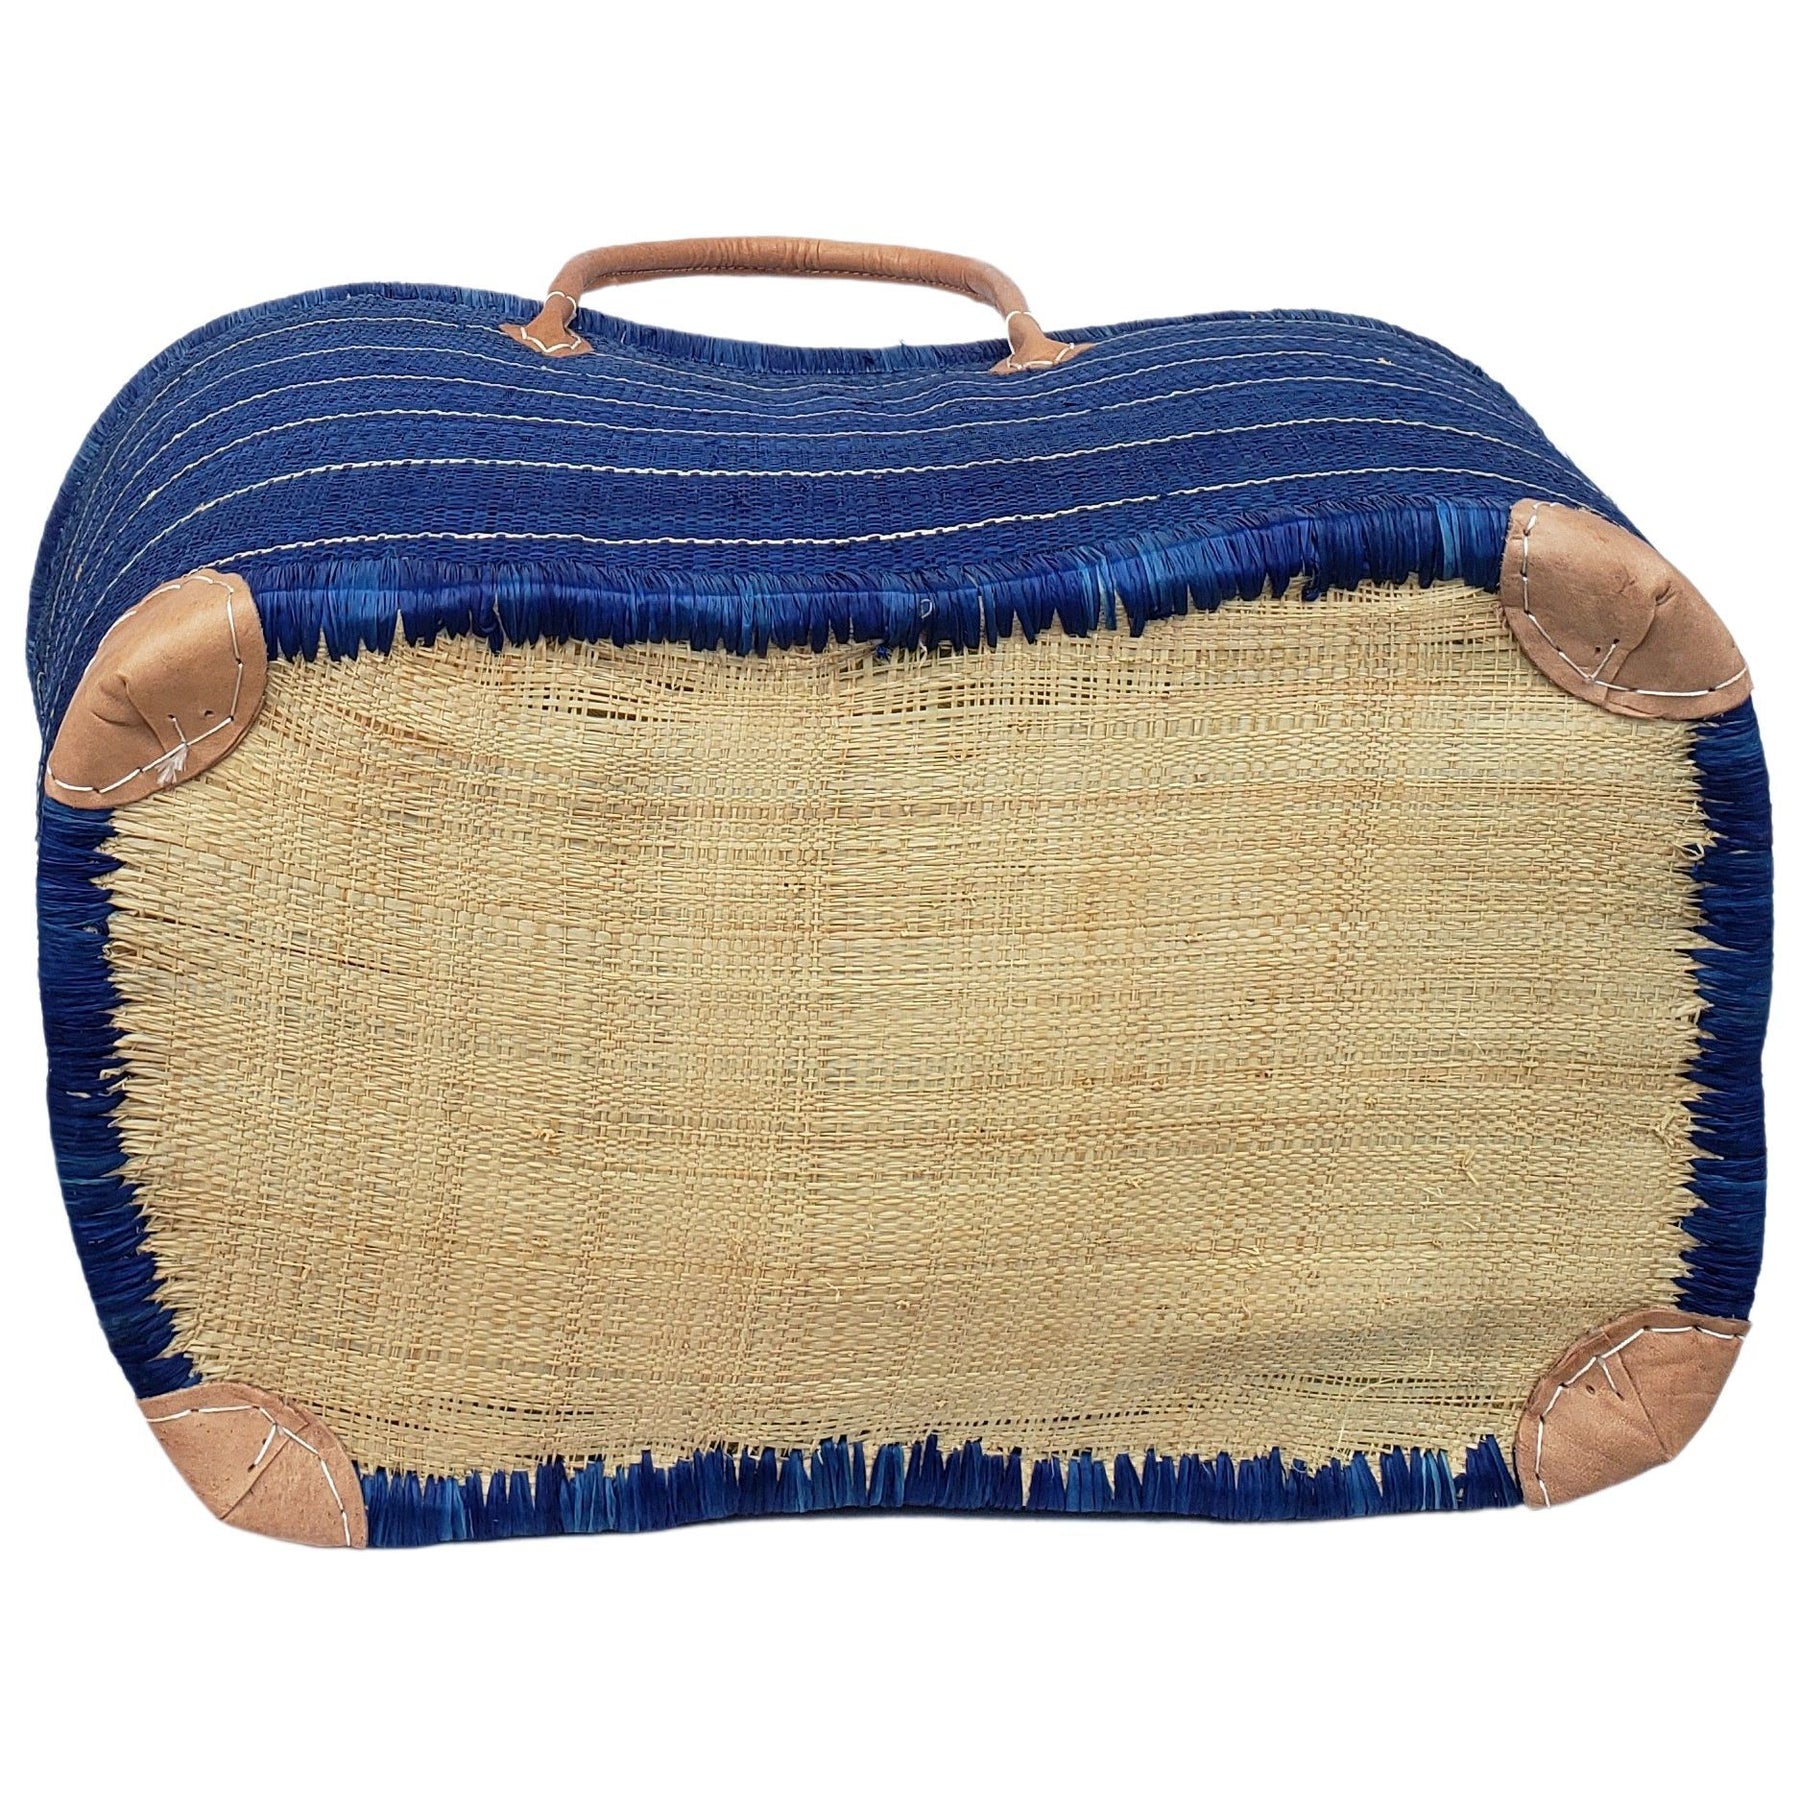 36 of 59: Adjanie: Authentic Madagascar Raffia and Leather Tote Bag (Blue Stripe)